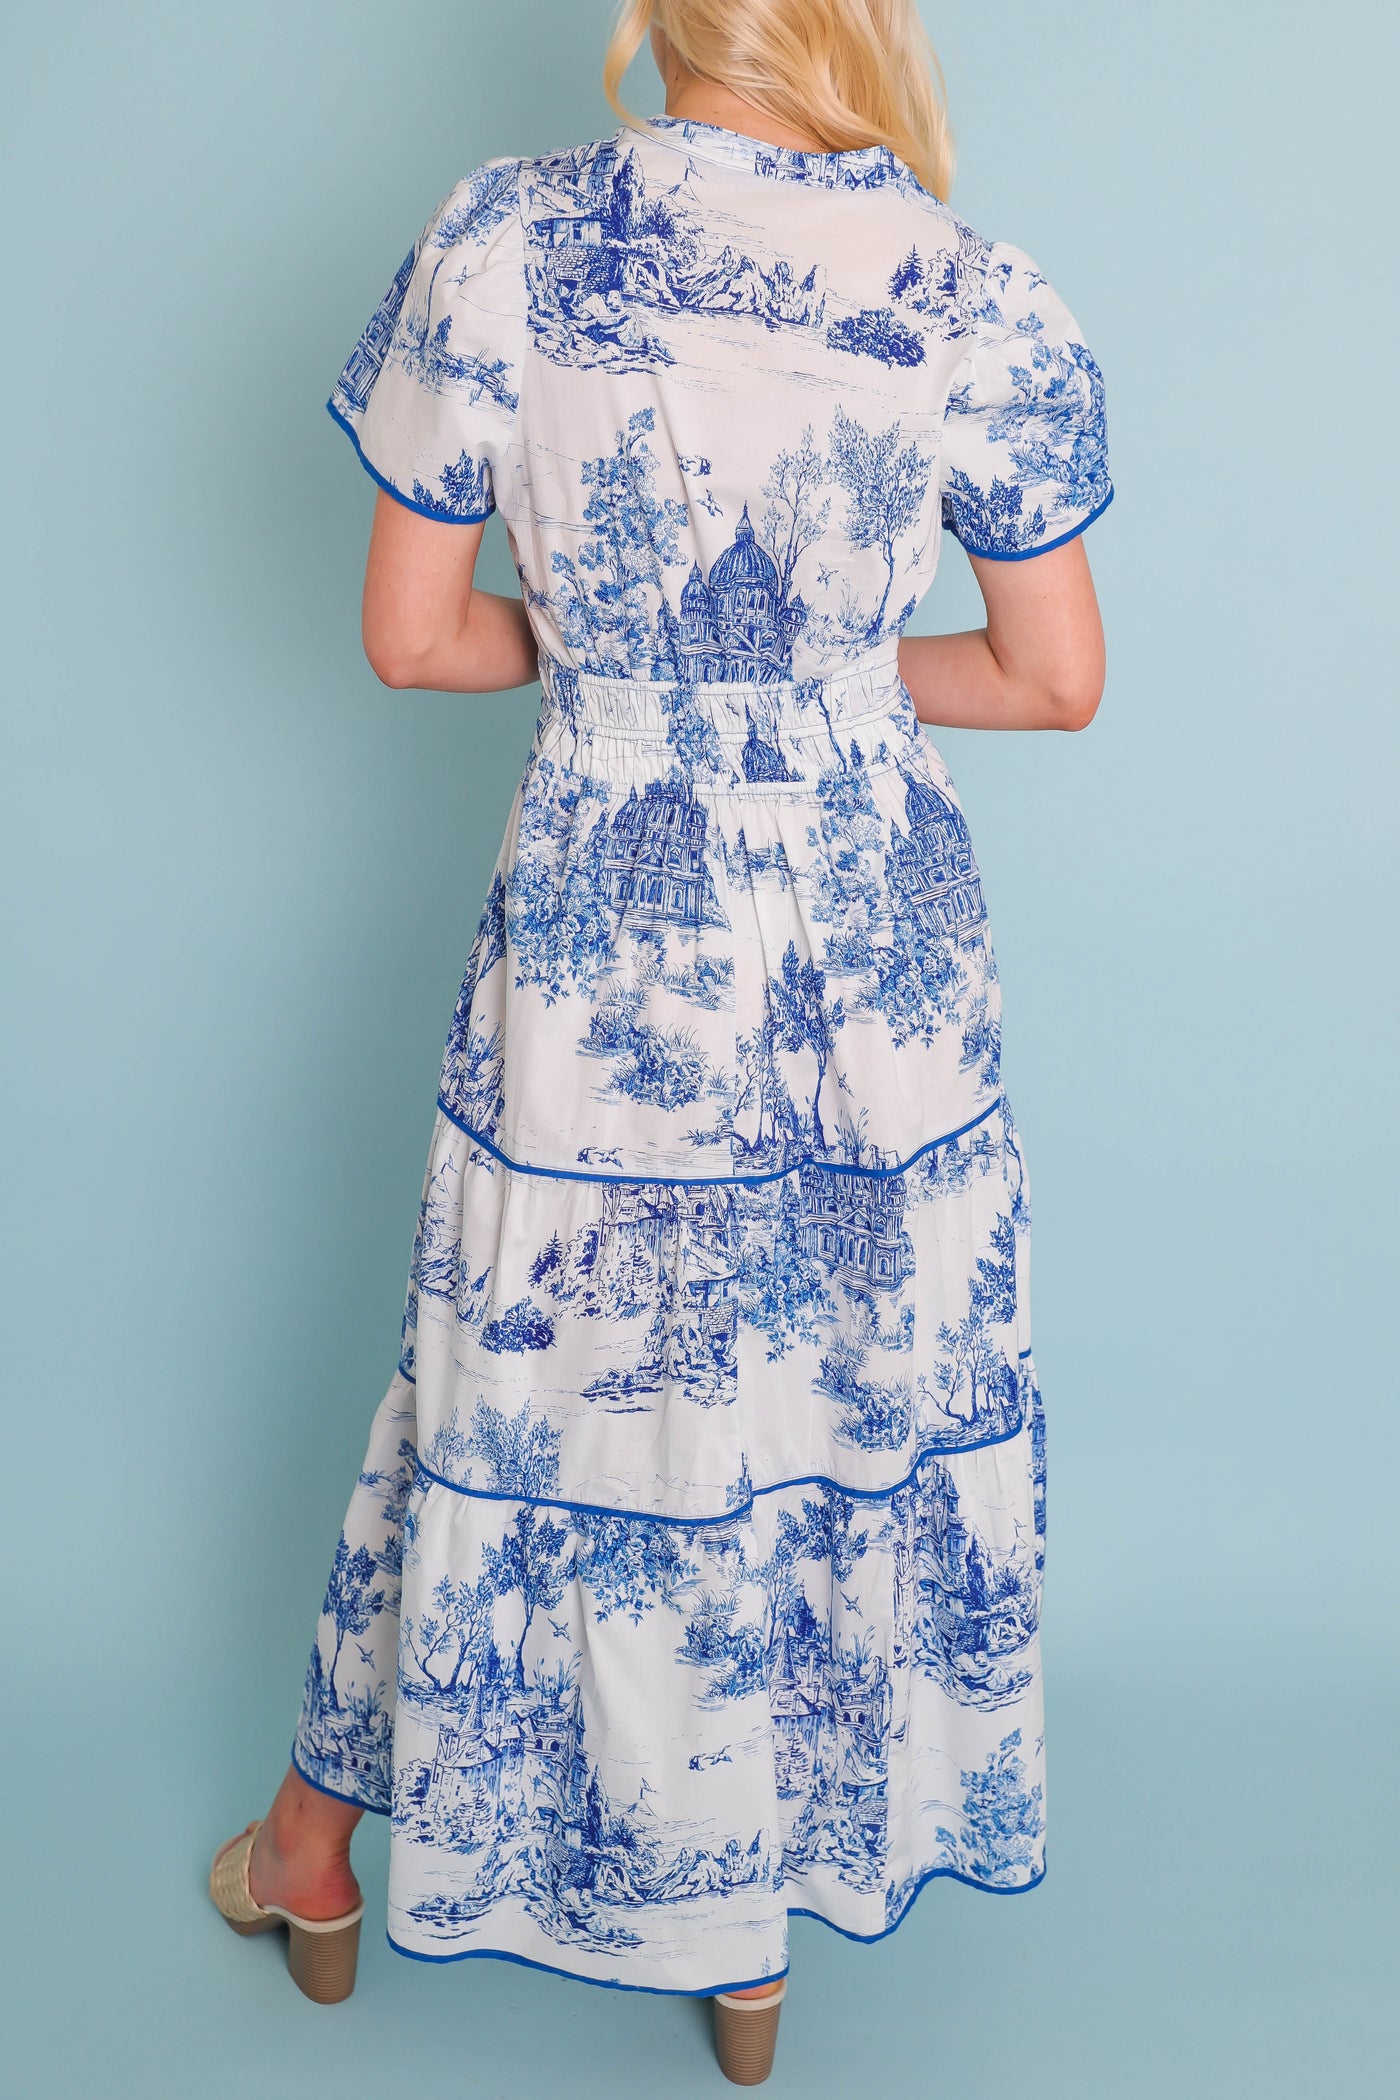 Landscape Print Tiered Dress- Coastal Grandmother Dress- Umgee Blue Print Dress